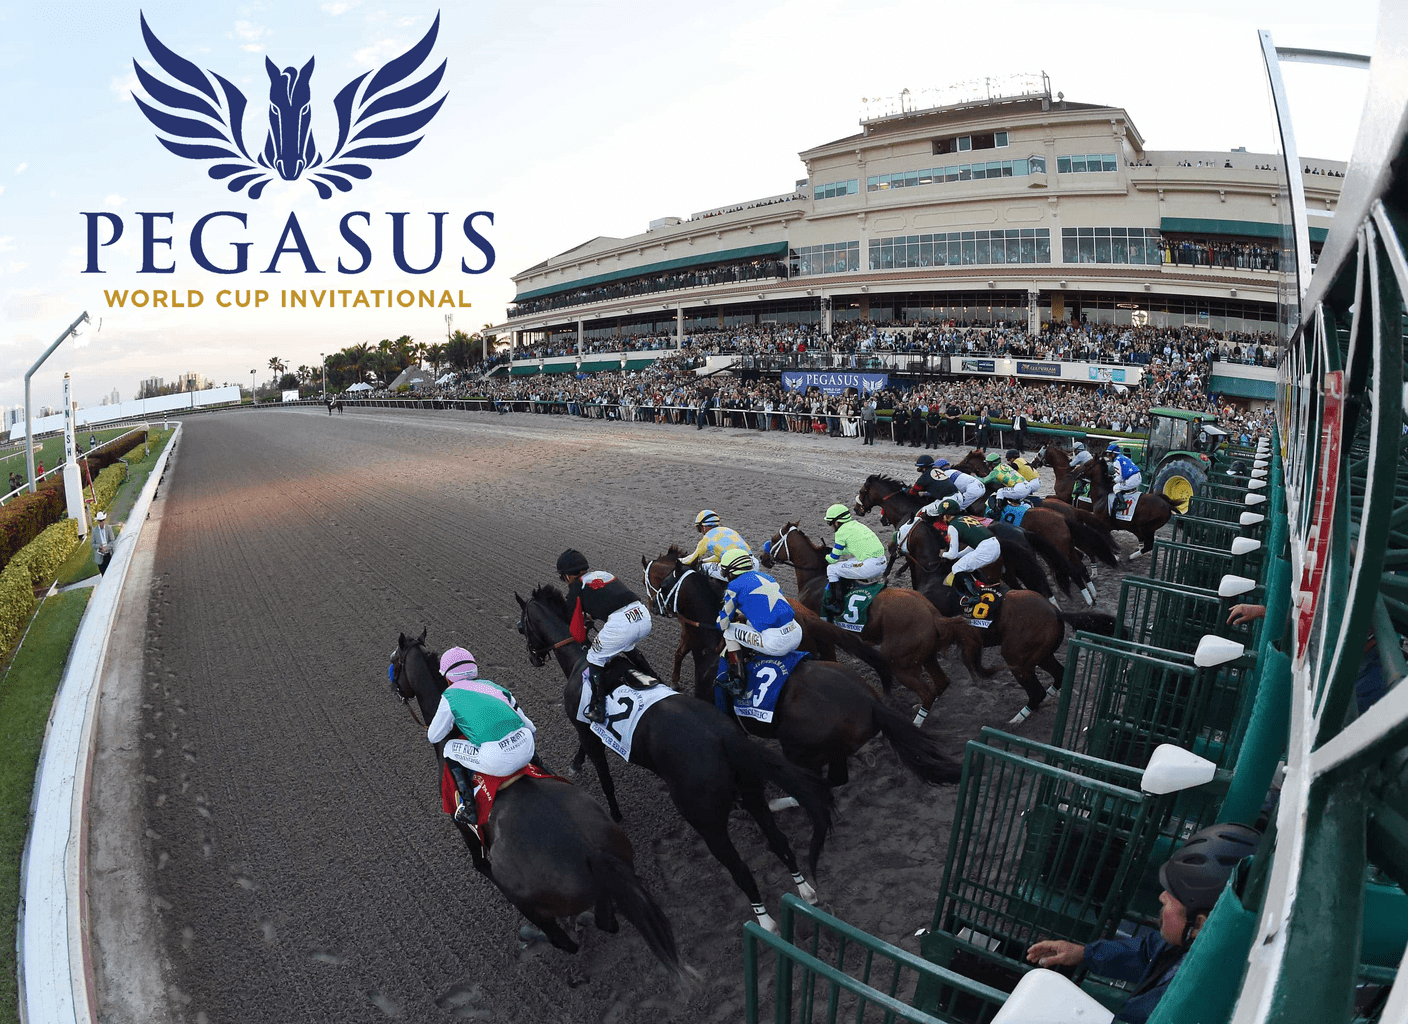 Pegasus Racing Logo - Pegasus World Cup Contenders, Picks and Results | Thoroughbred ...